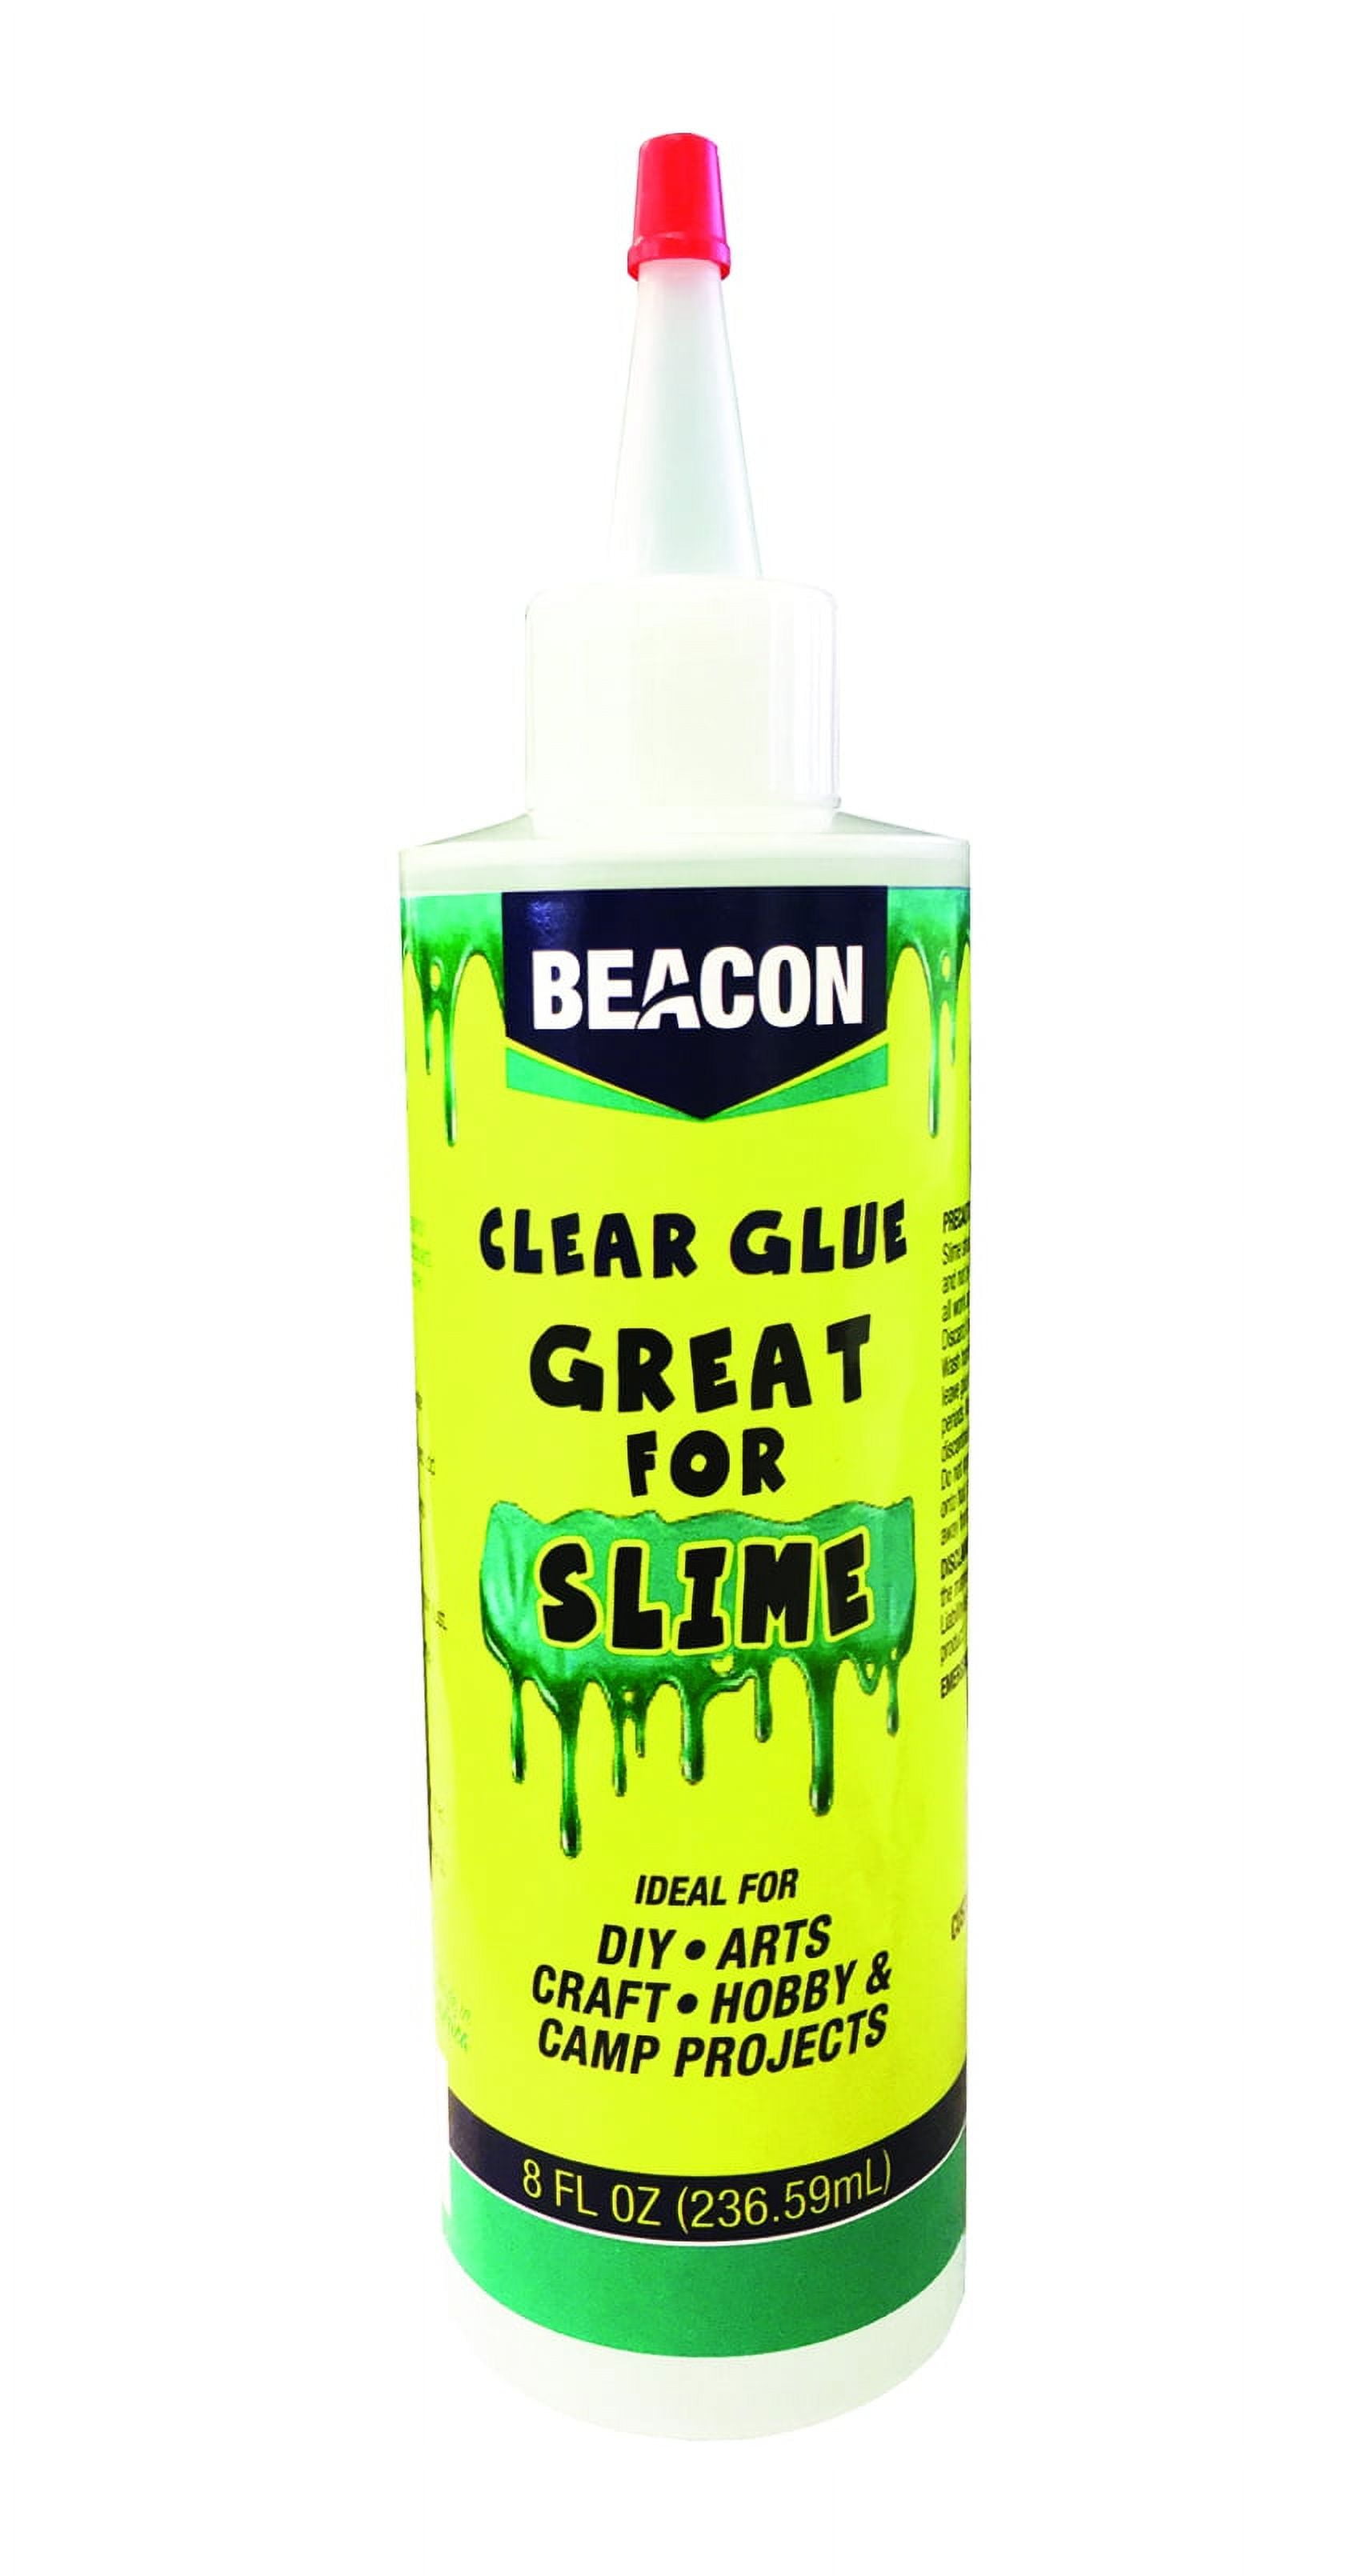 8oz BEACON CLEAR GLUE for SLIME - safe, non-toxic fun craft adhesive!